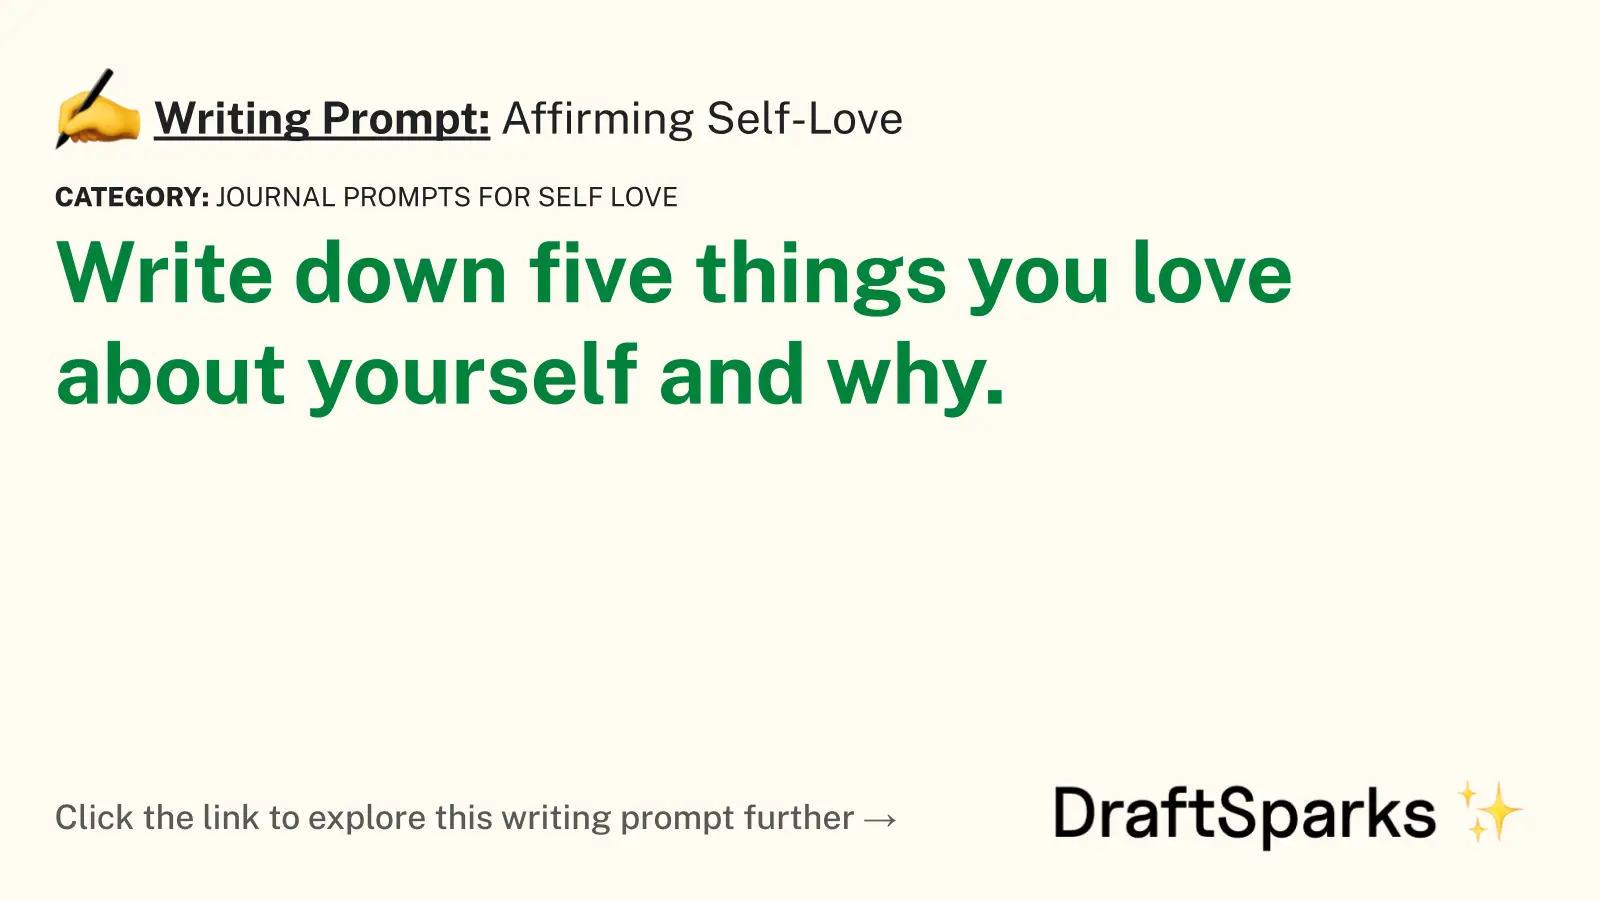 Affirming Self-Love